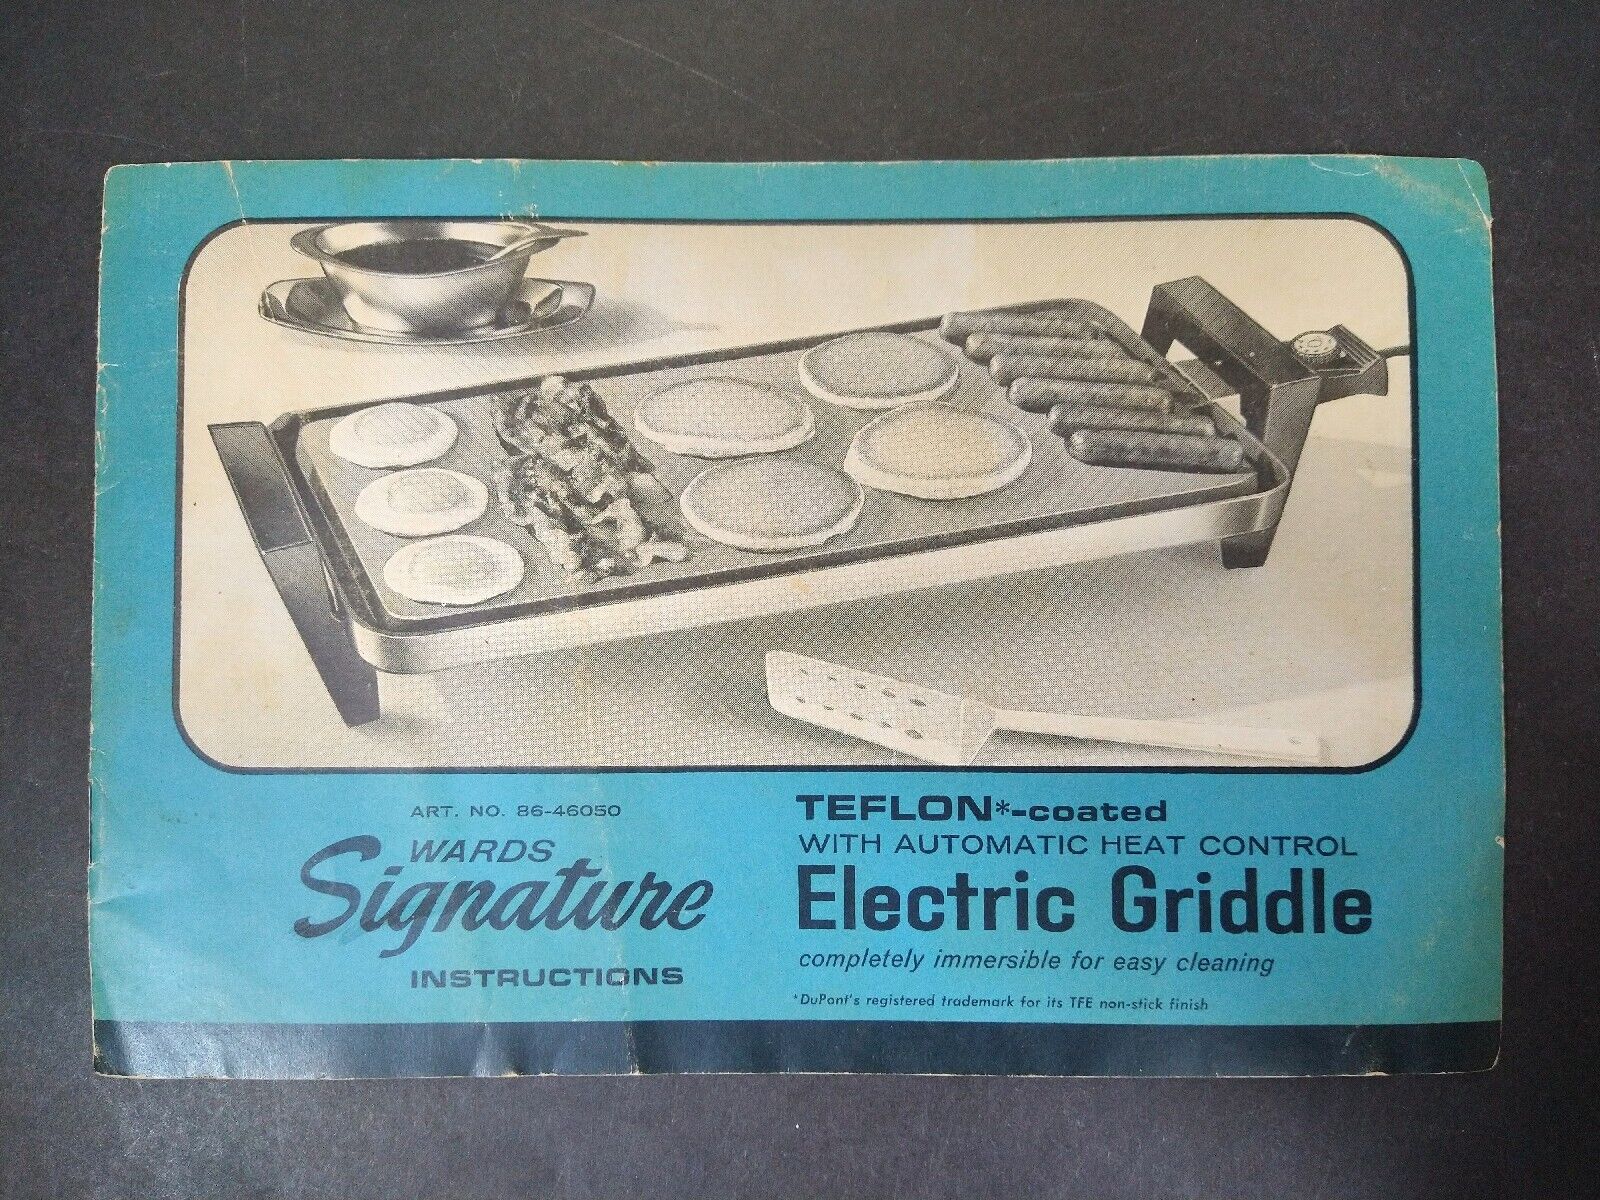 Vintage 1960s Wards Signature Electric Griddle Instructions Booklet